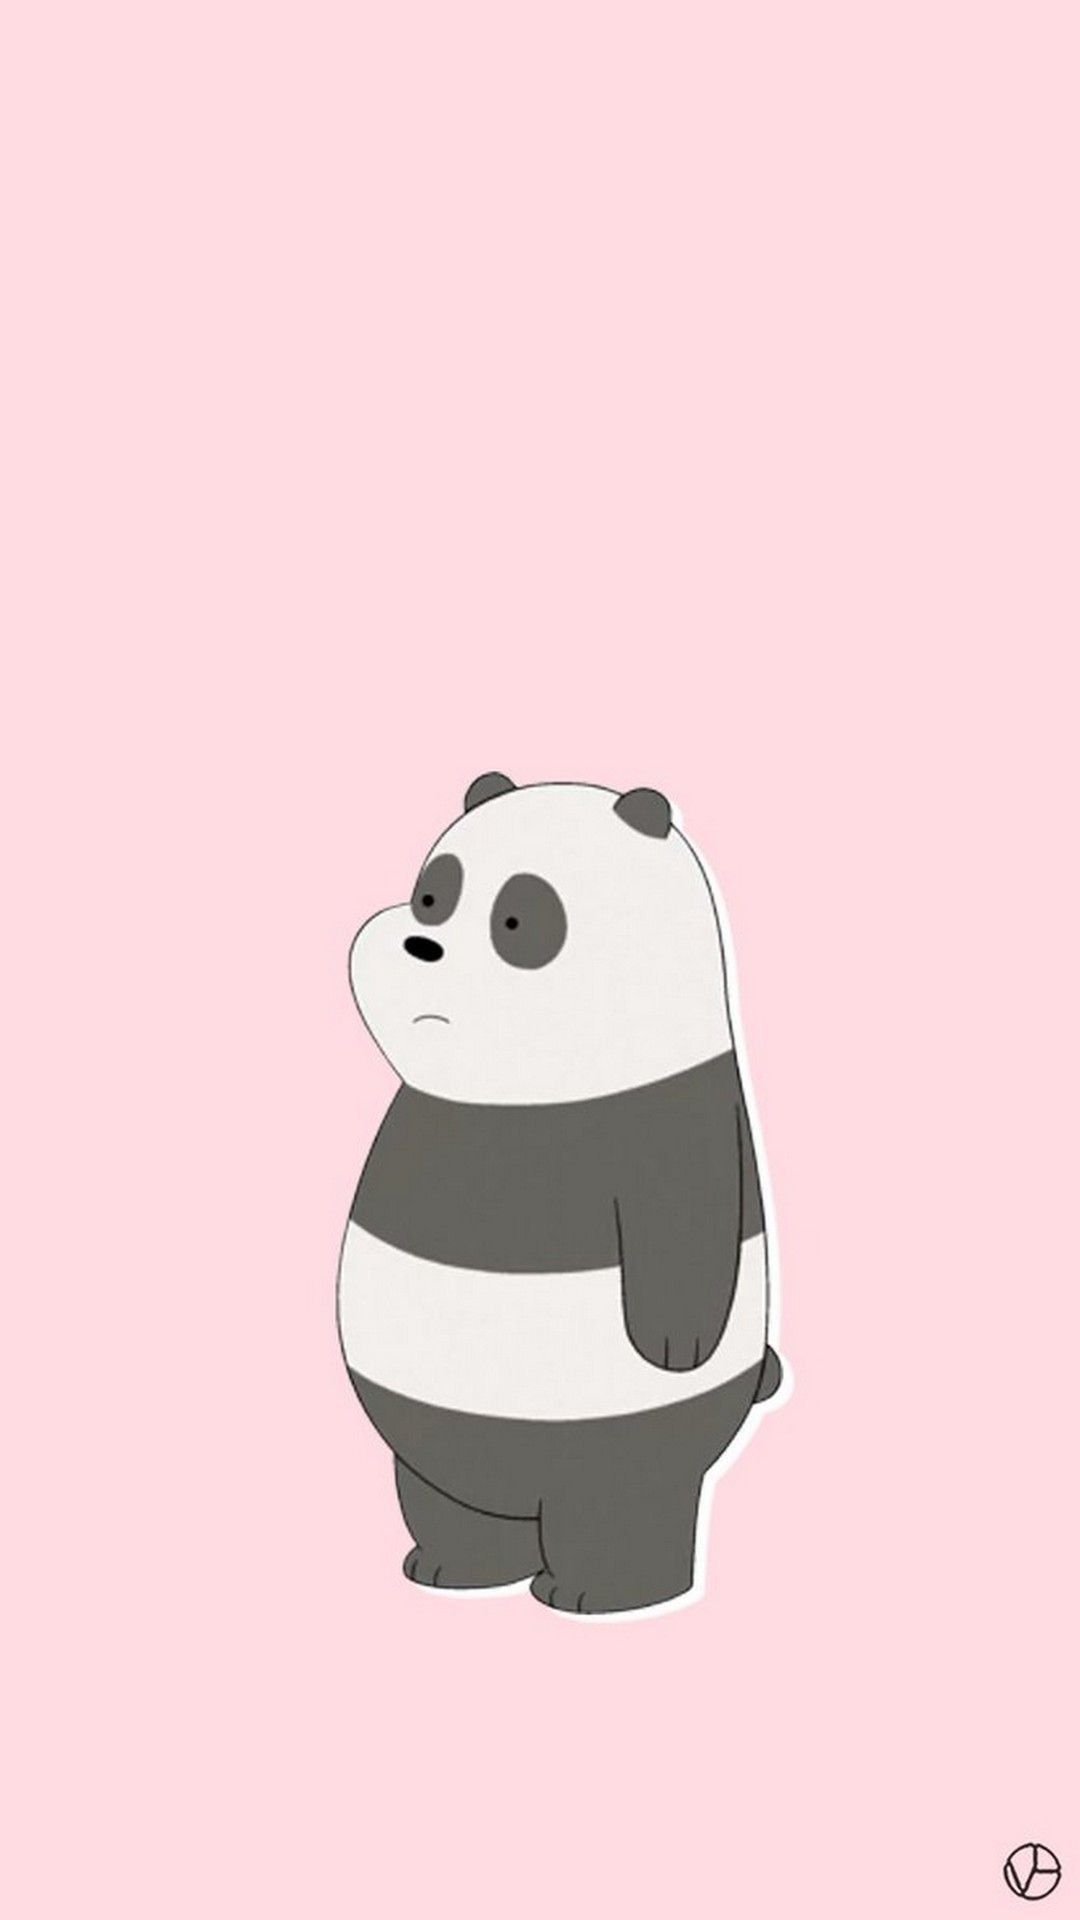 Kawaii Cute Panda Wallpapers On Wallpaperdog